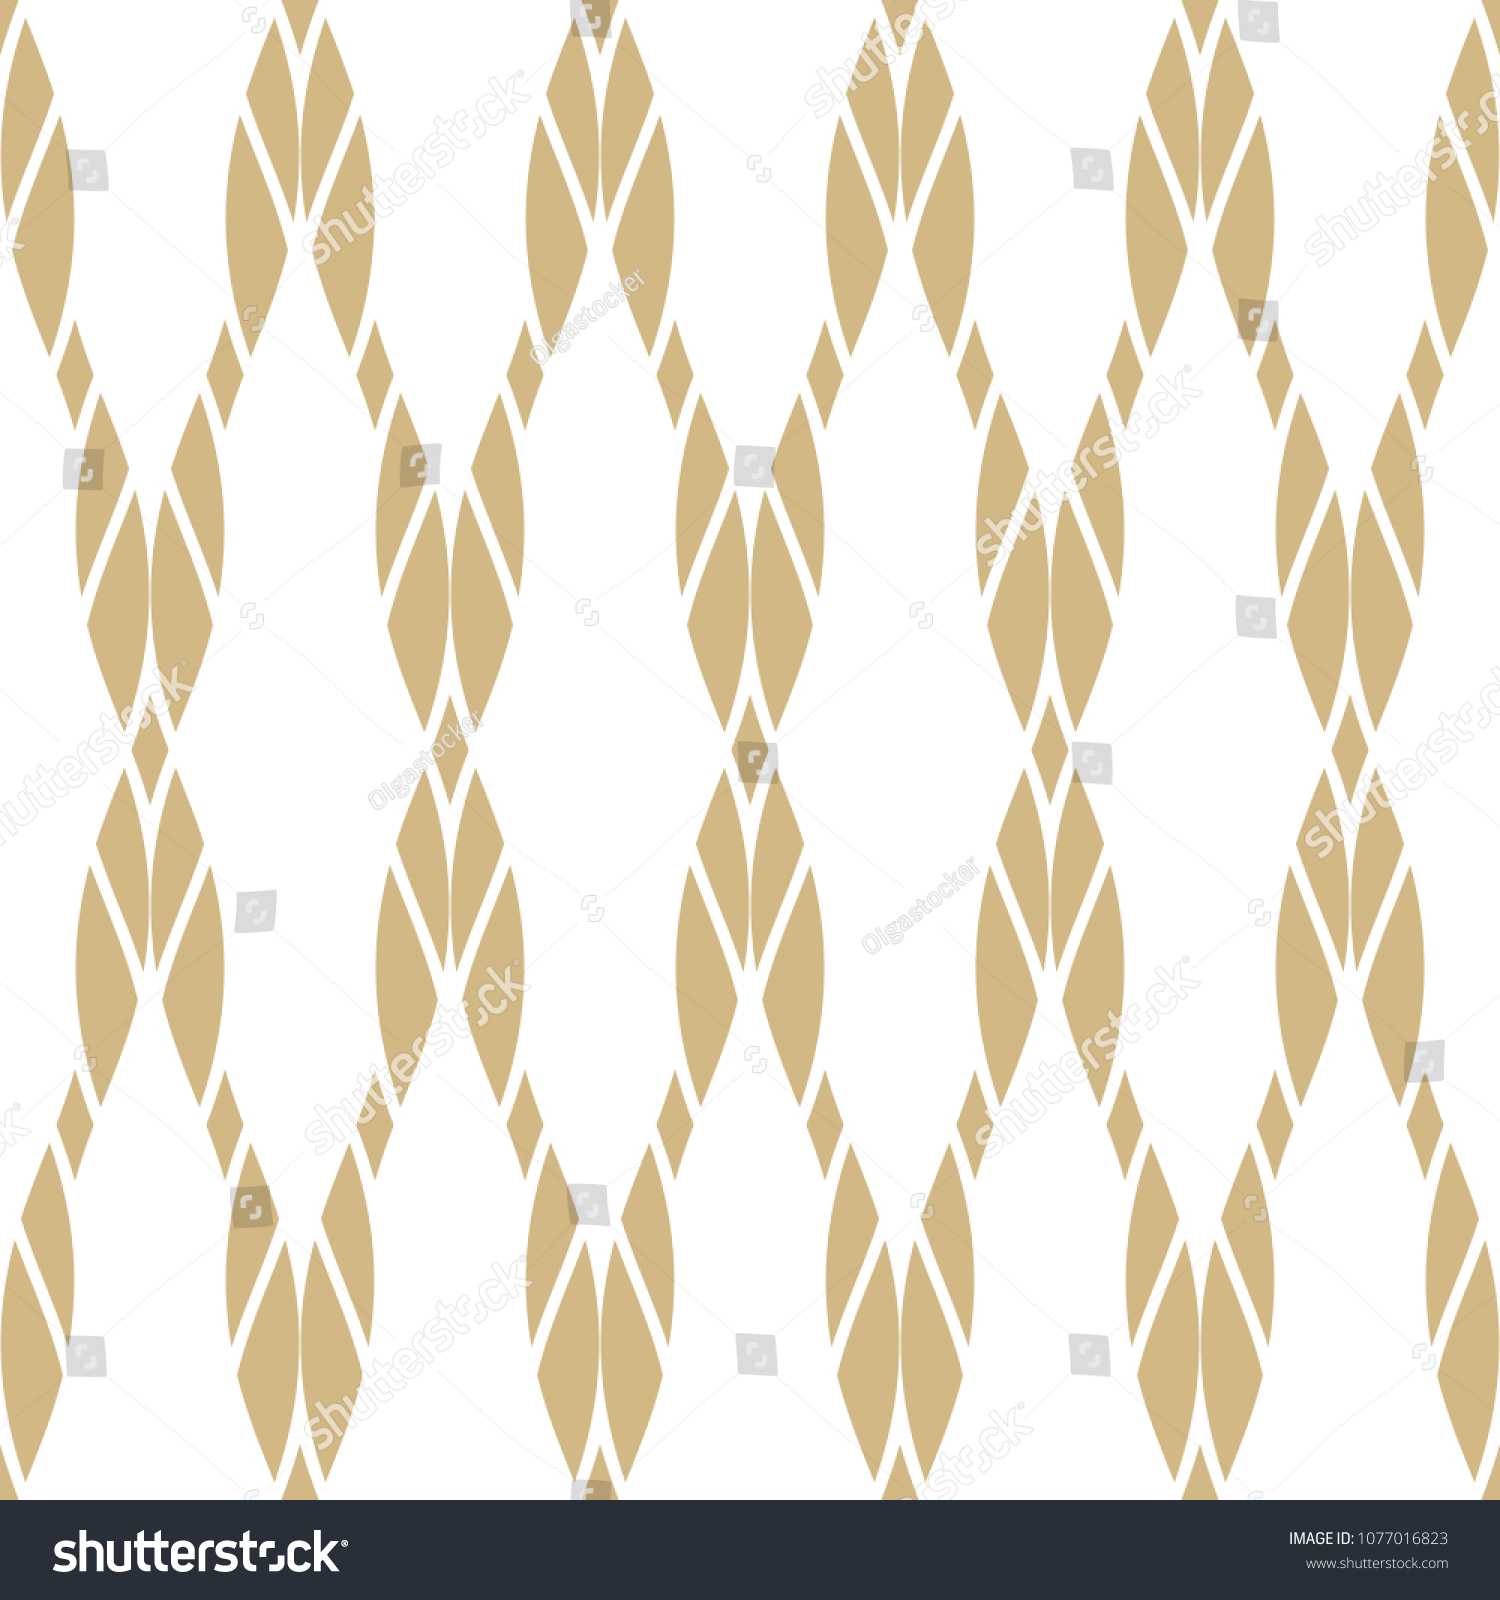 Vector Golden Rope Seamless Pattern Elegant Stock Vector Royalty Free Shutterstock